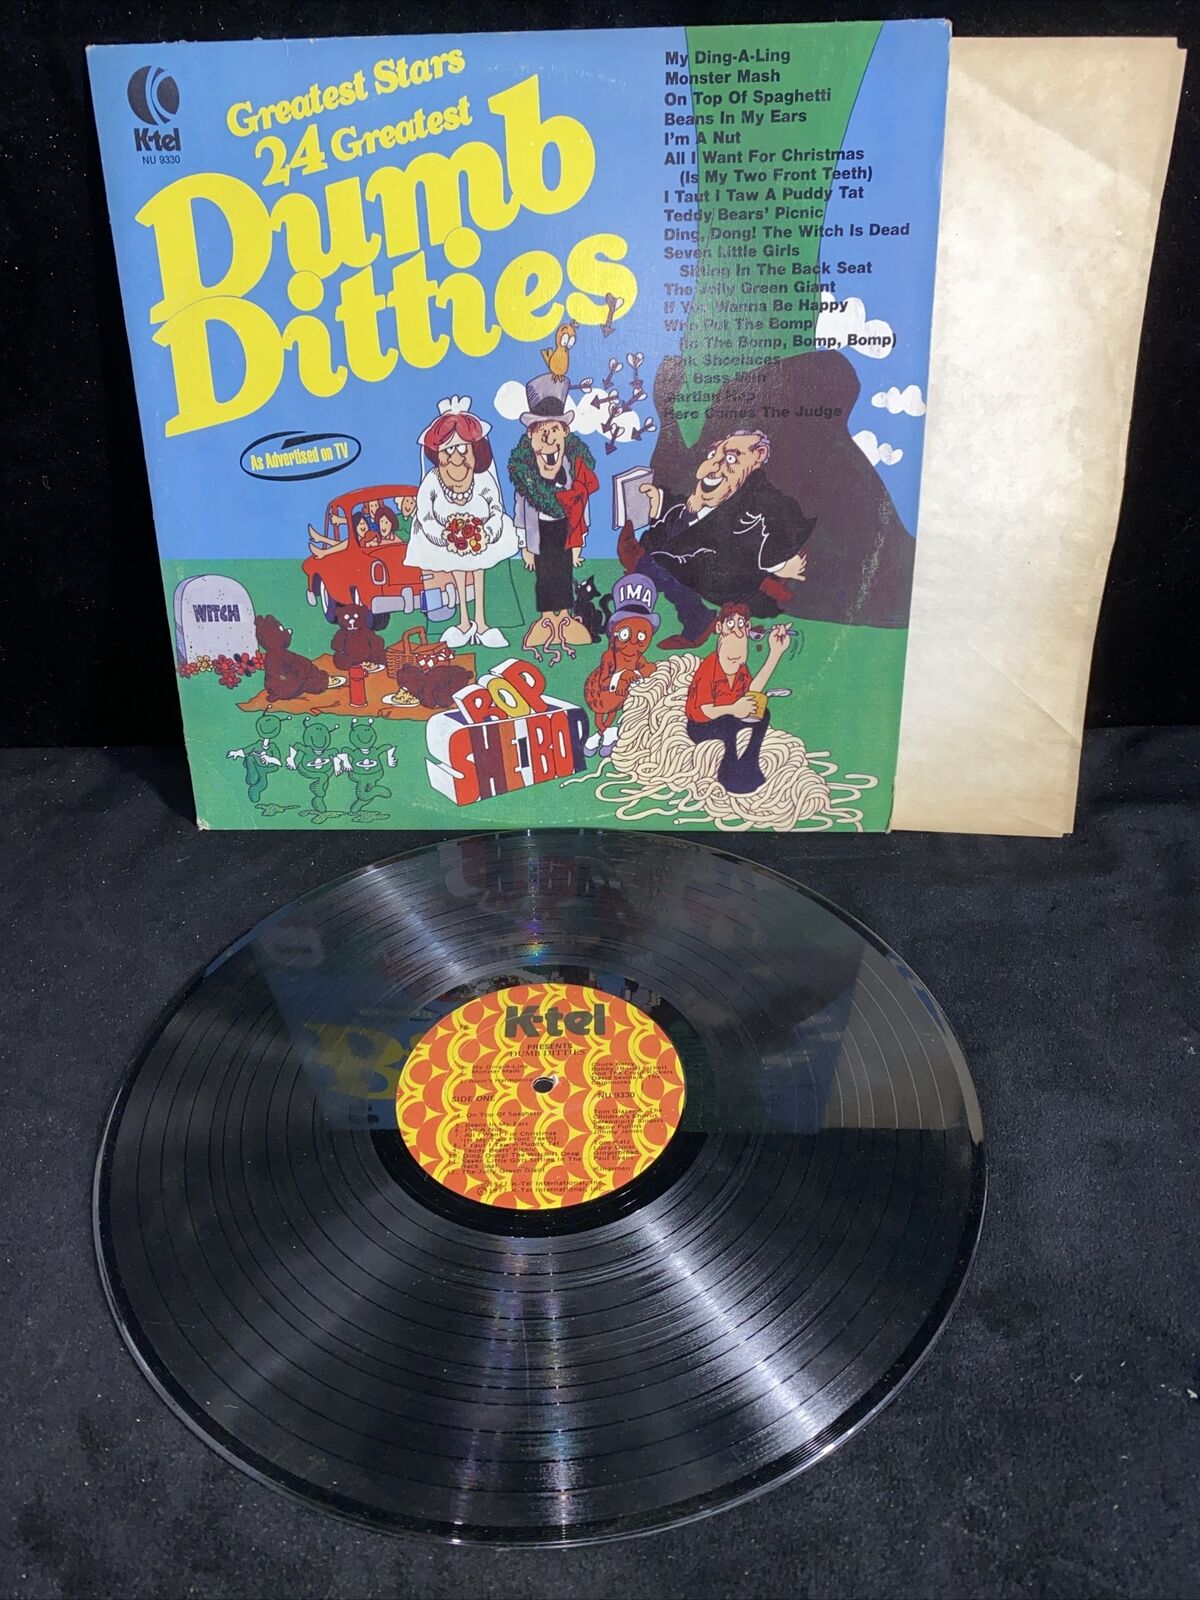 Ktel Dumb Ditties Greatest Stars 24 Greatest Album LP Vinyl Vintage 1977 VG